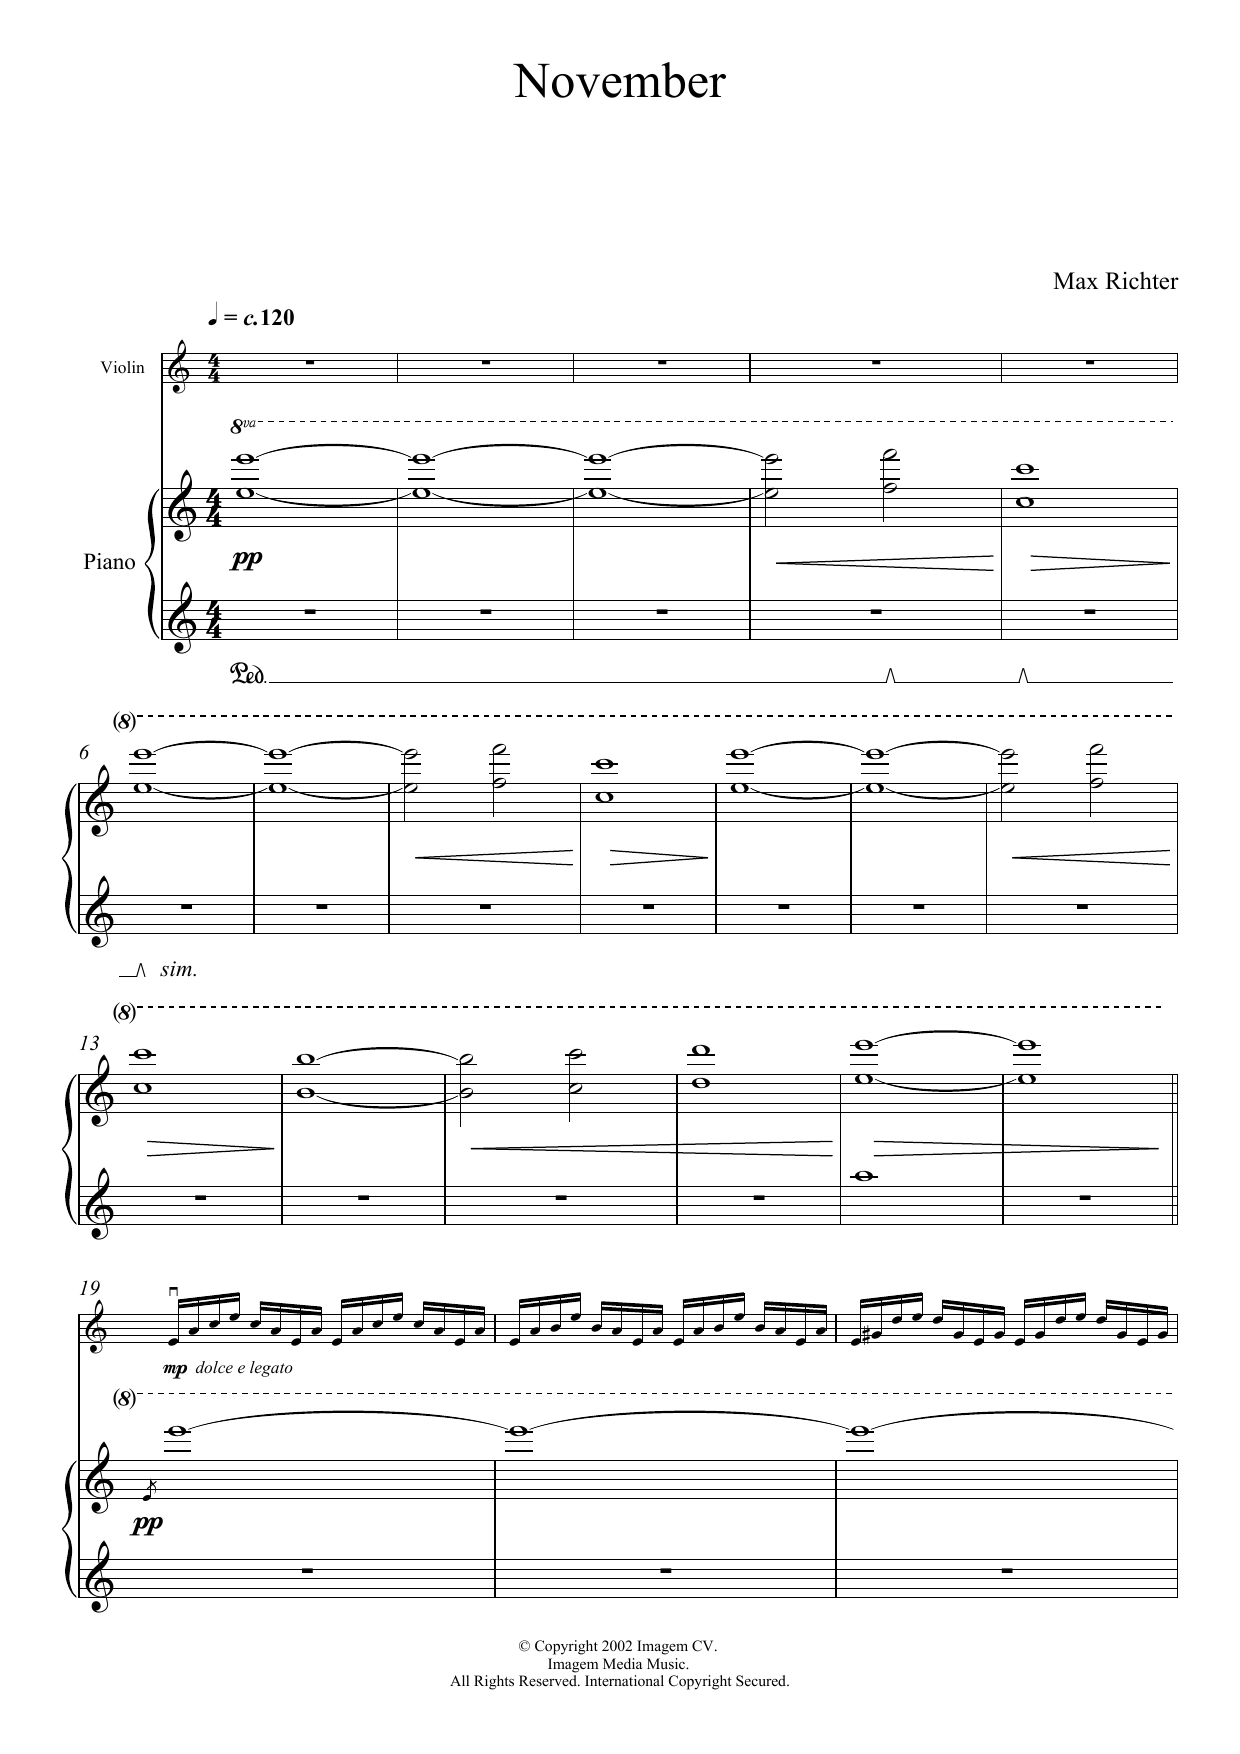 Max Richter November Sheet Music Notes & Chords for Violin - Download or Print PDF